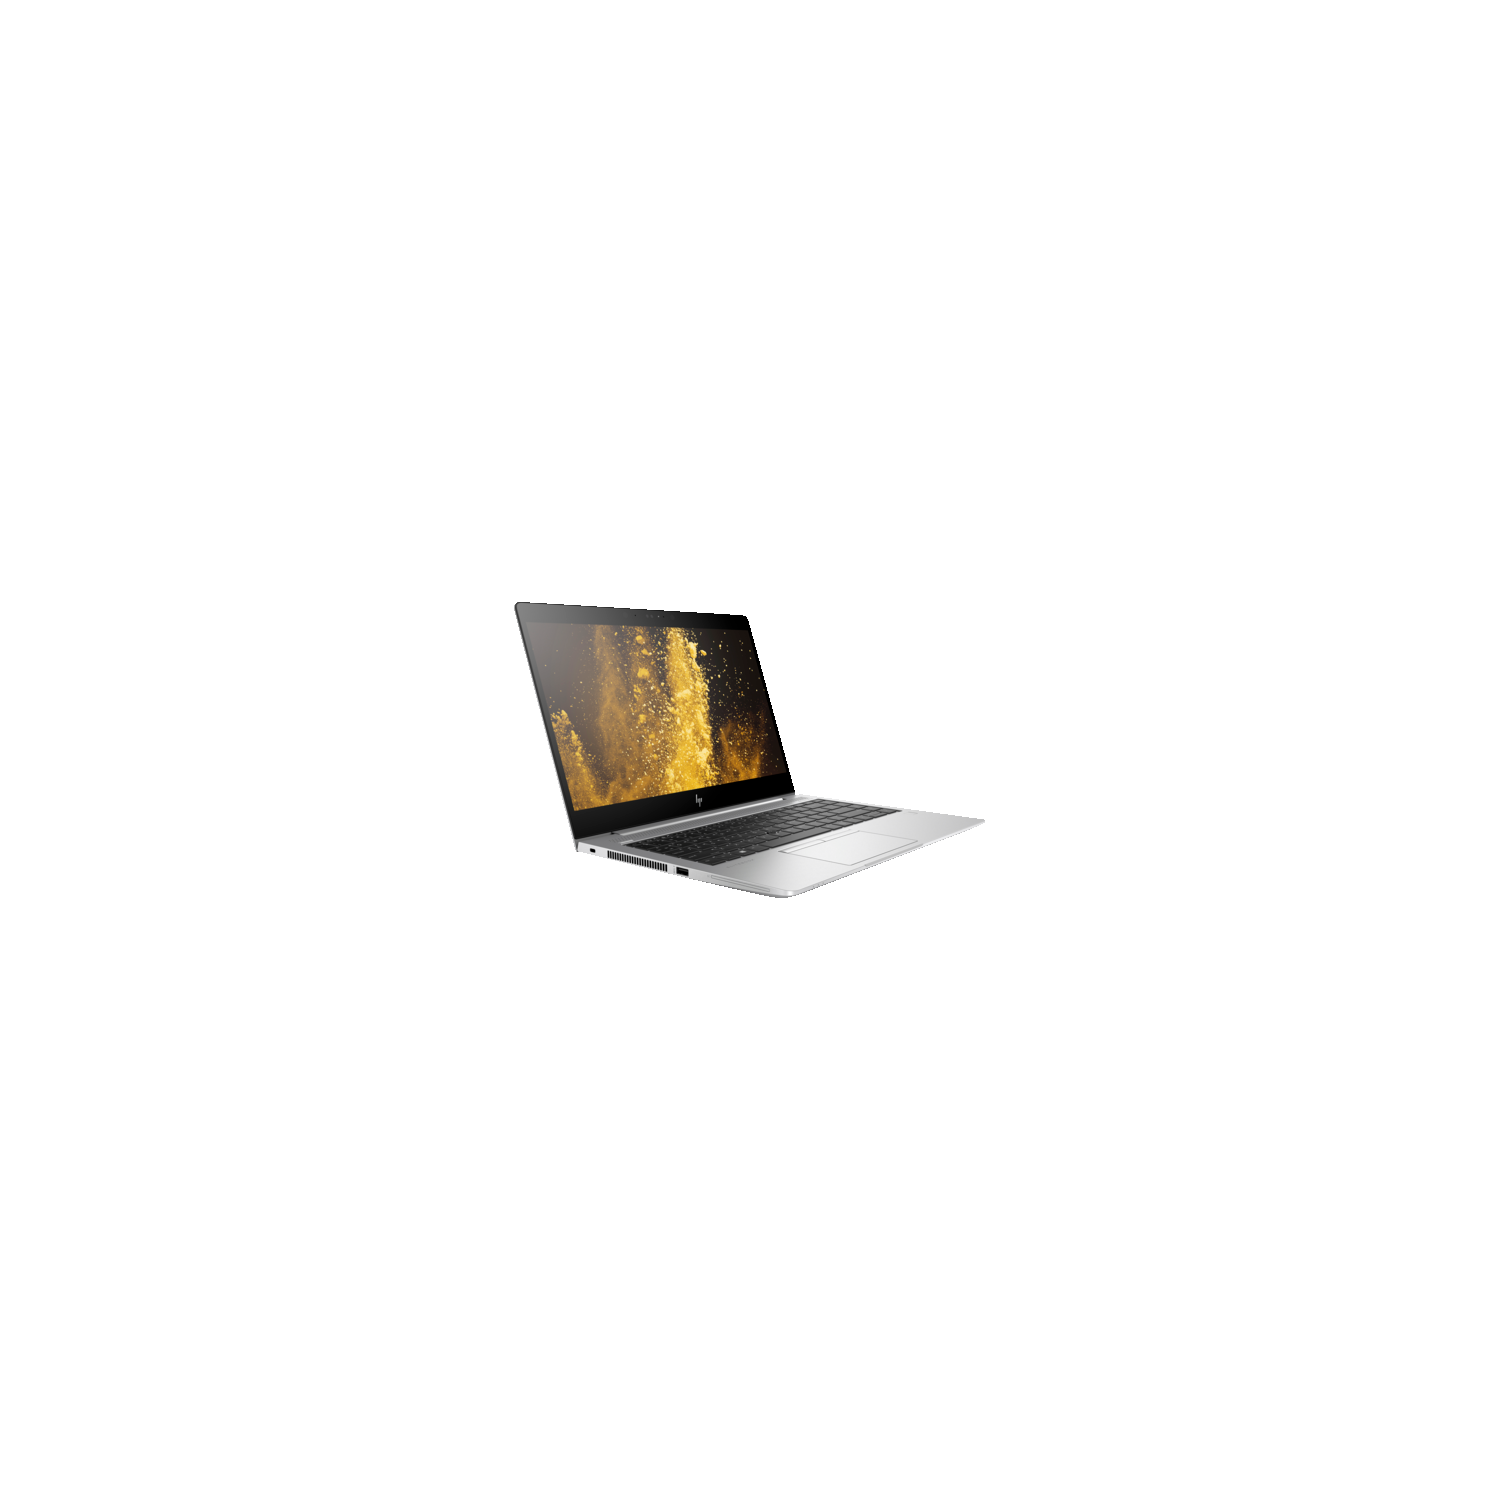 HP EliteBook 840 G5 14" Laptop - (Intel Core i7-8550U / 512GB SSD / 16GB RAM / Windows 10) - (3WD95UT#ABA)